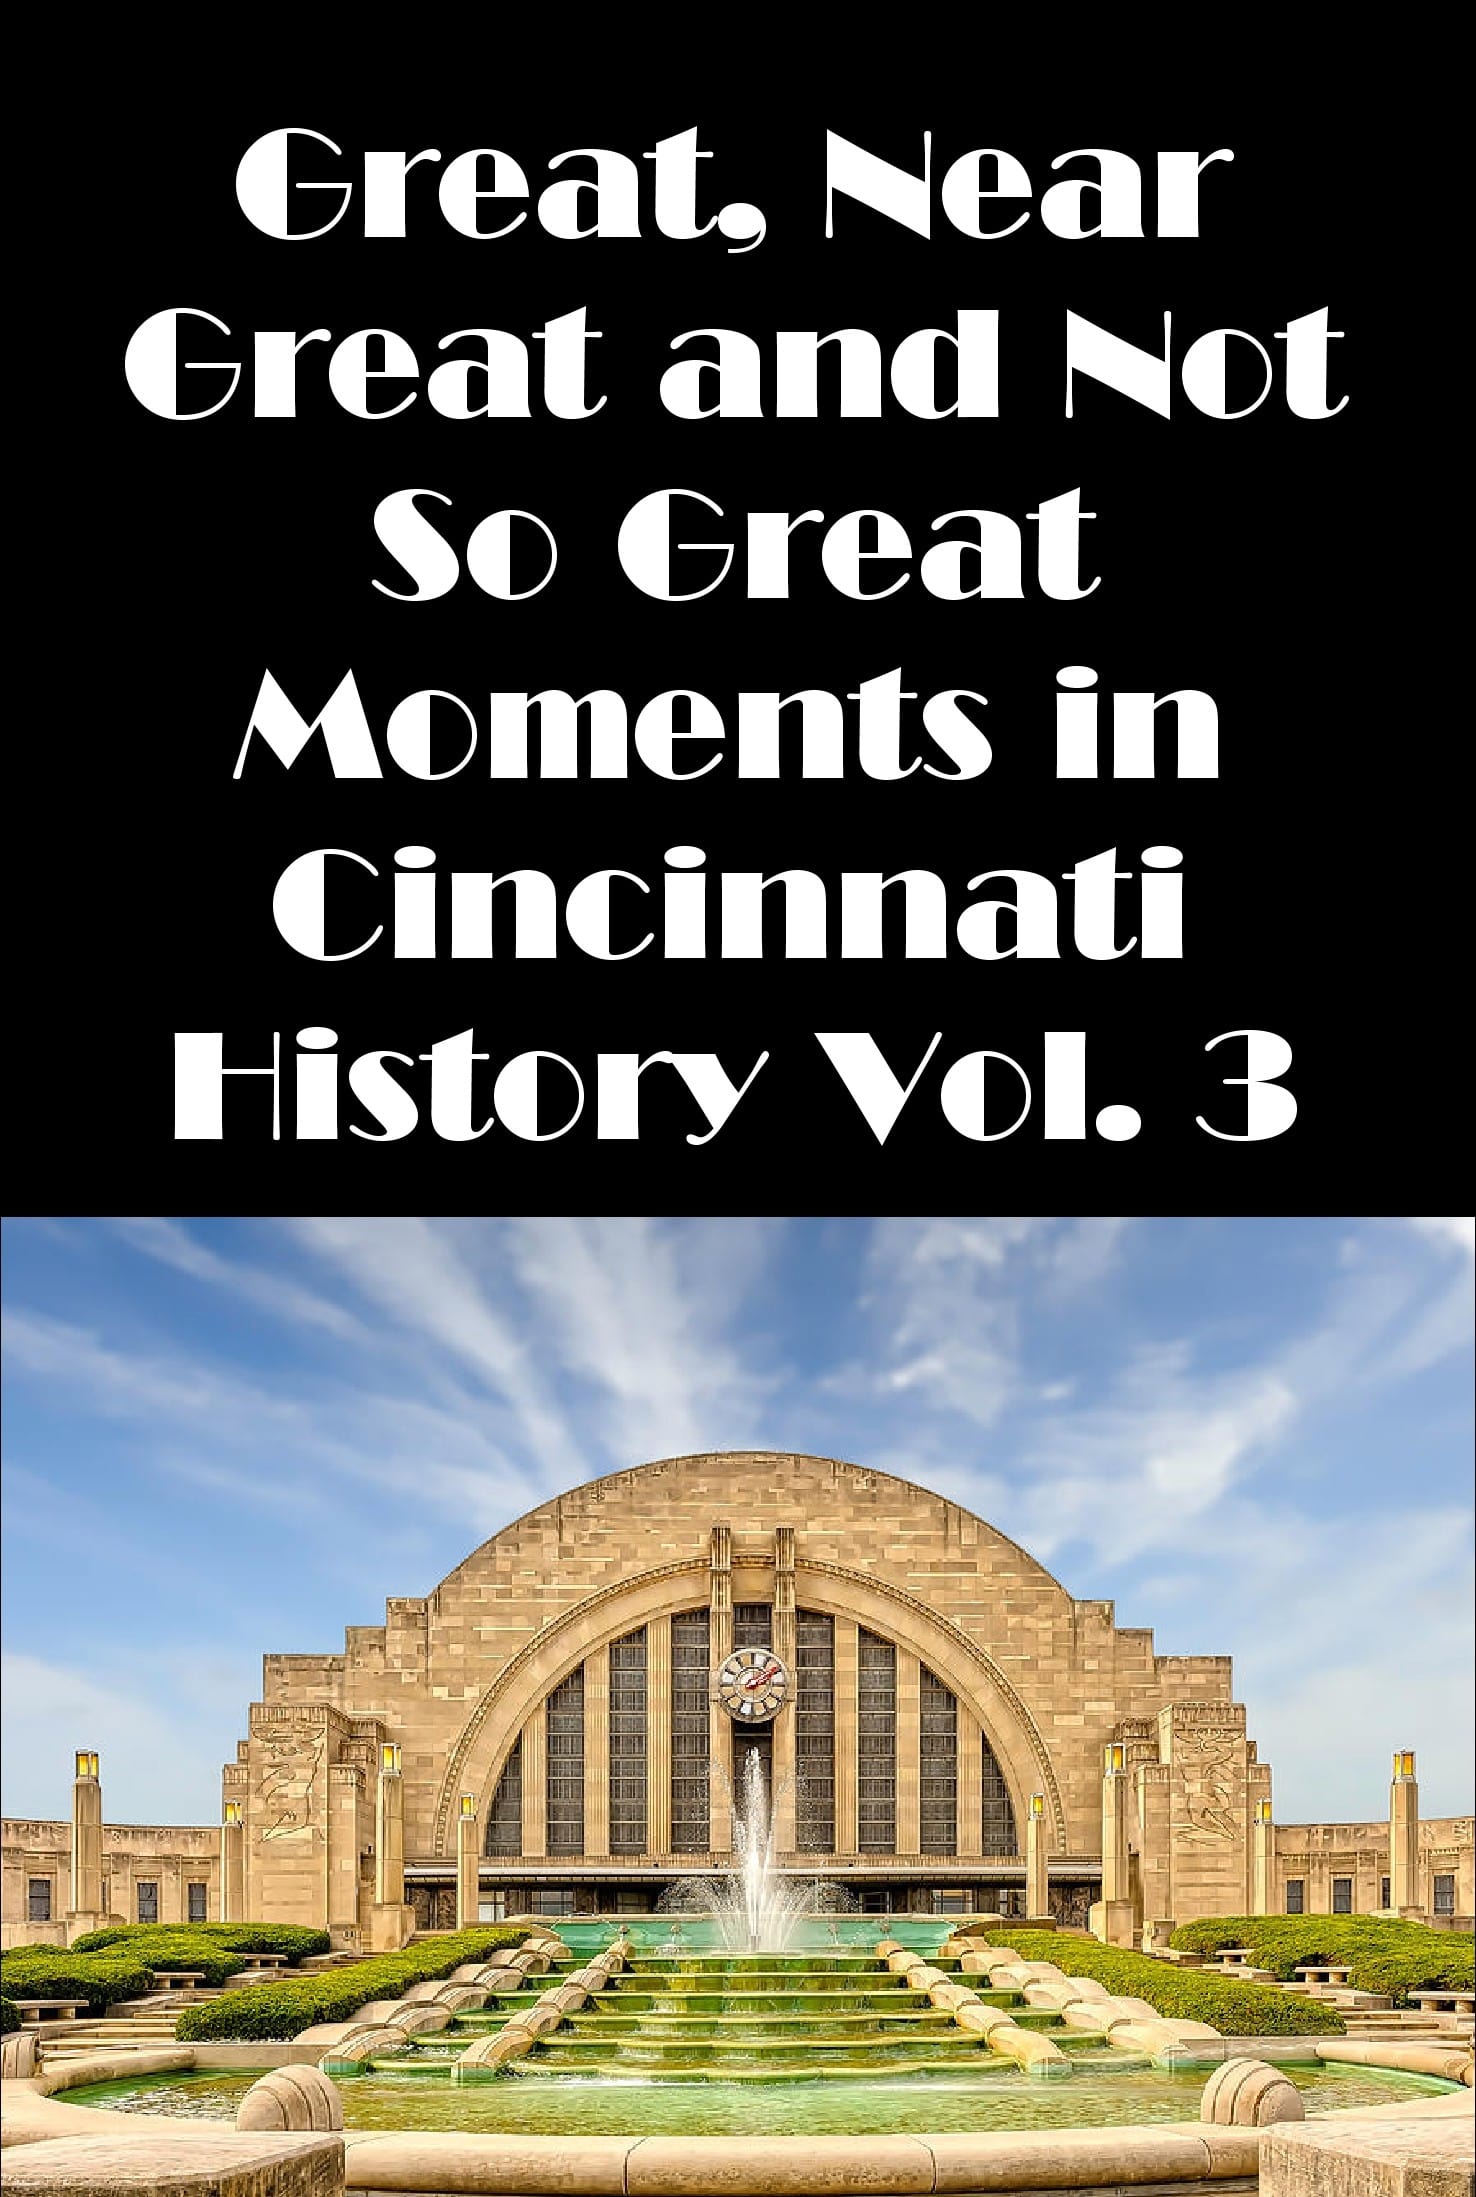 Cincinnati: Great, Near Great and Not So Great Moments in Cincinnati History Vol. 3